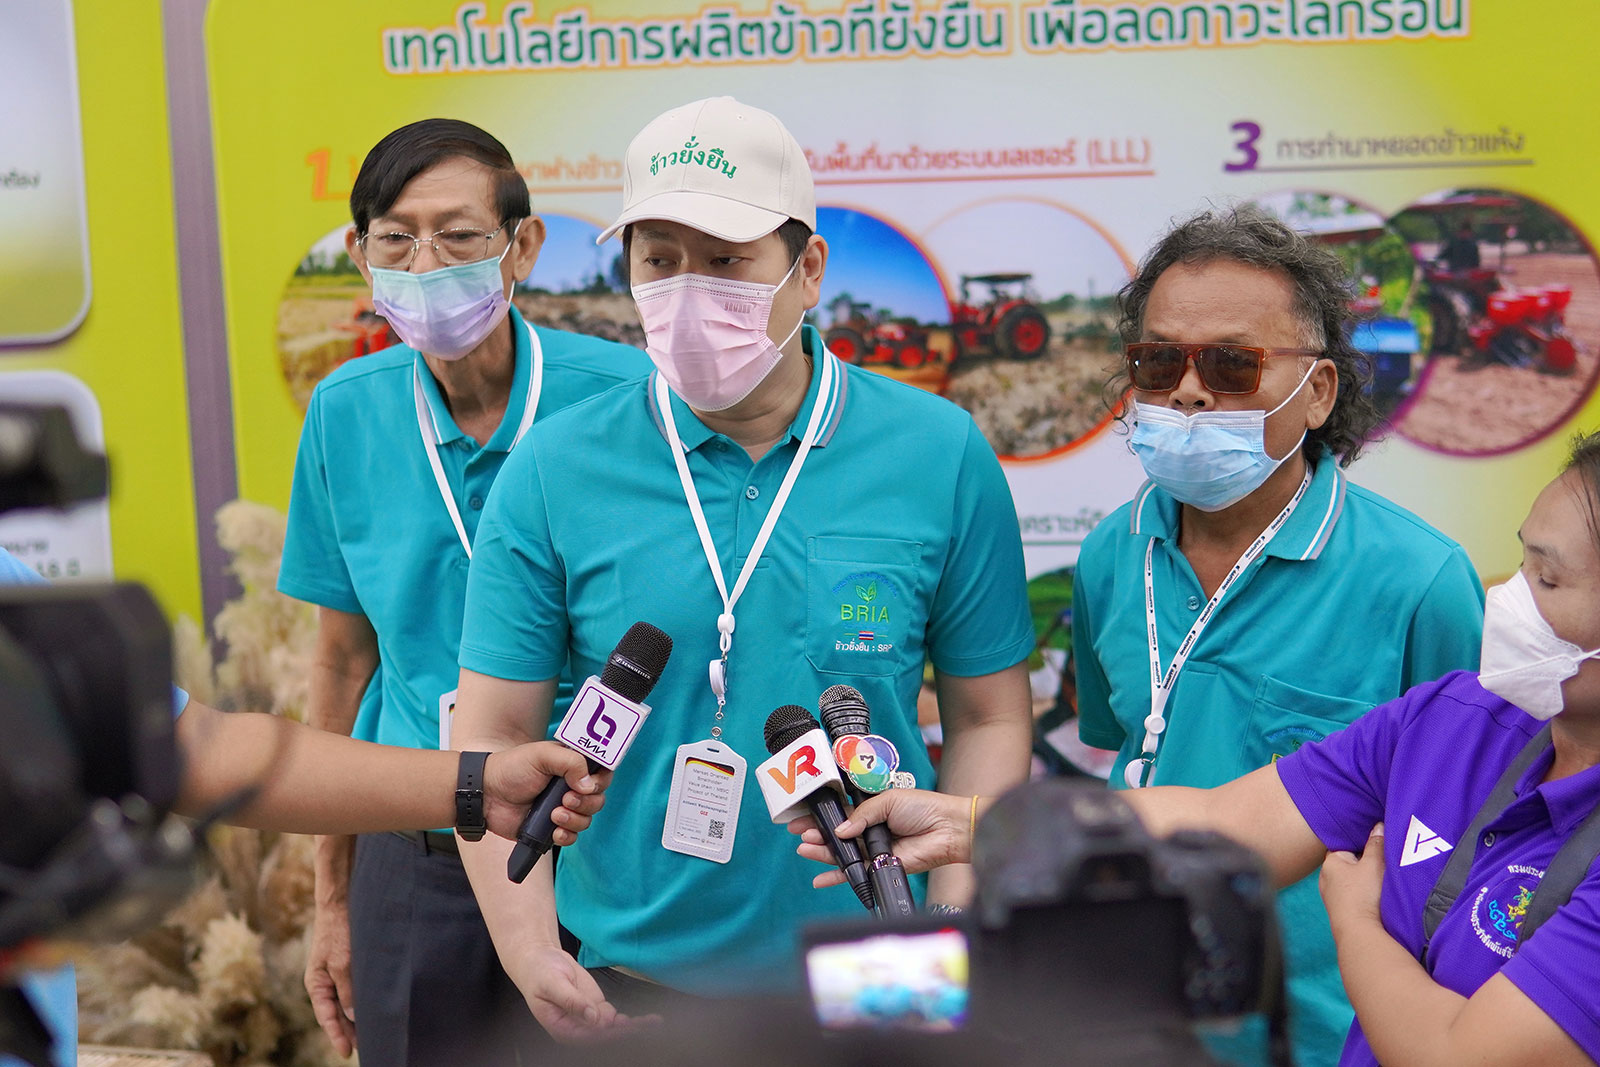 Press interview session (ผู้อำนวยการโครงการ MSVC ประเทศไทยให้สัมภาษณ์สื่อมวลชน)